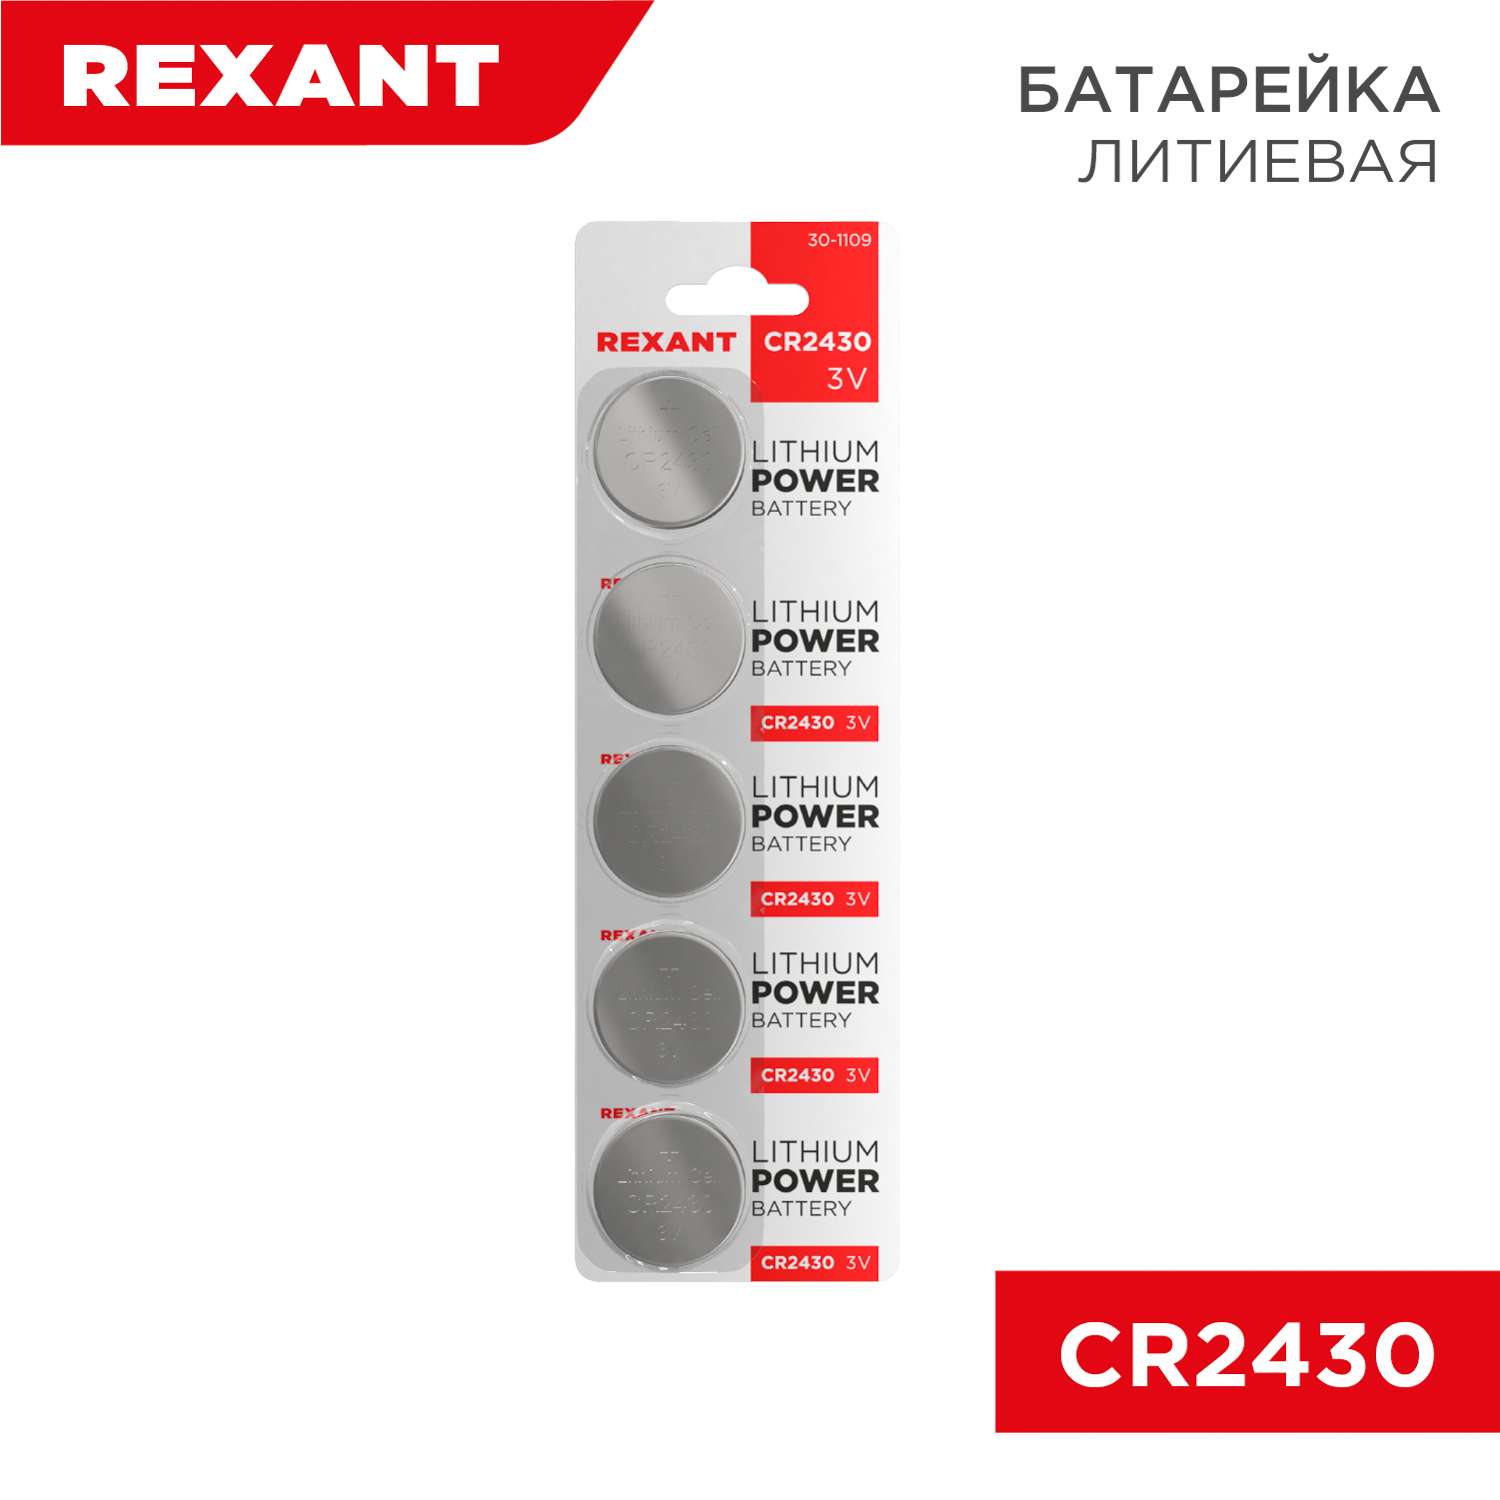 Батарейка REXANT литиевая CR2430 3В 5 штук - фото 1